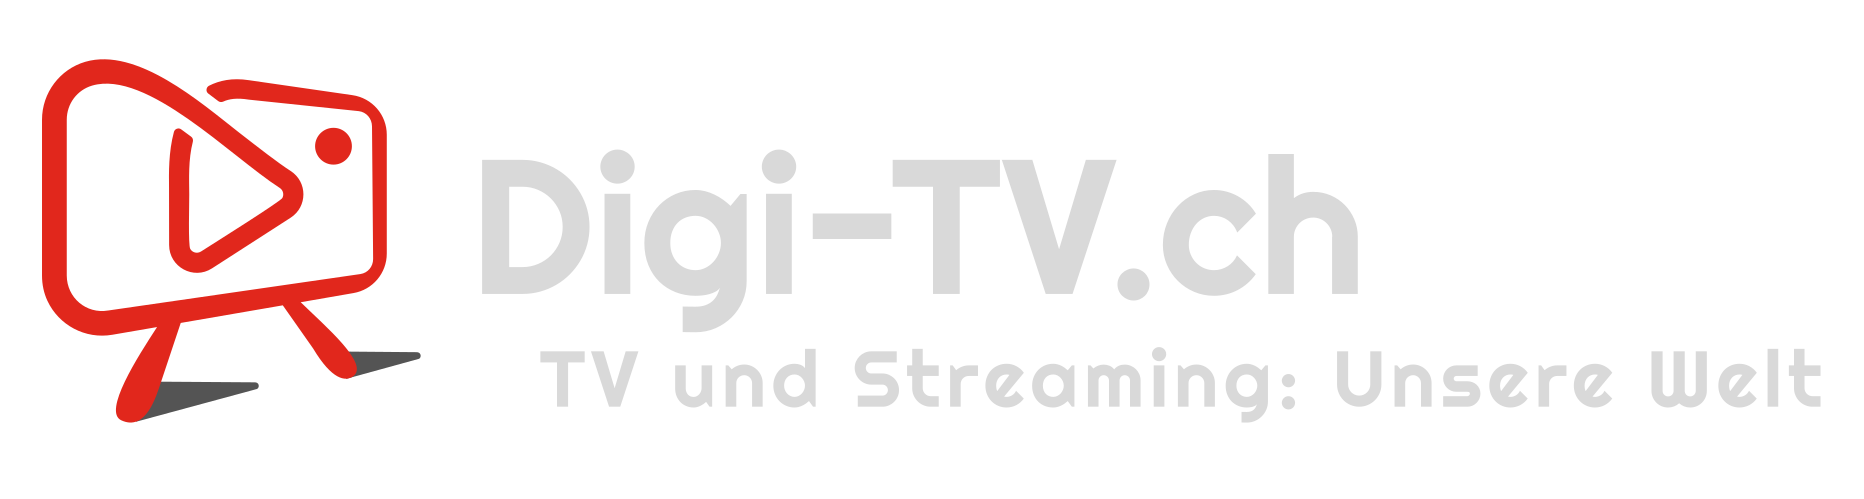 Digi-TV.ch: TV & Streaming - Unsere Welt